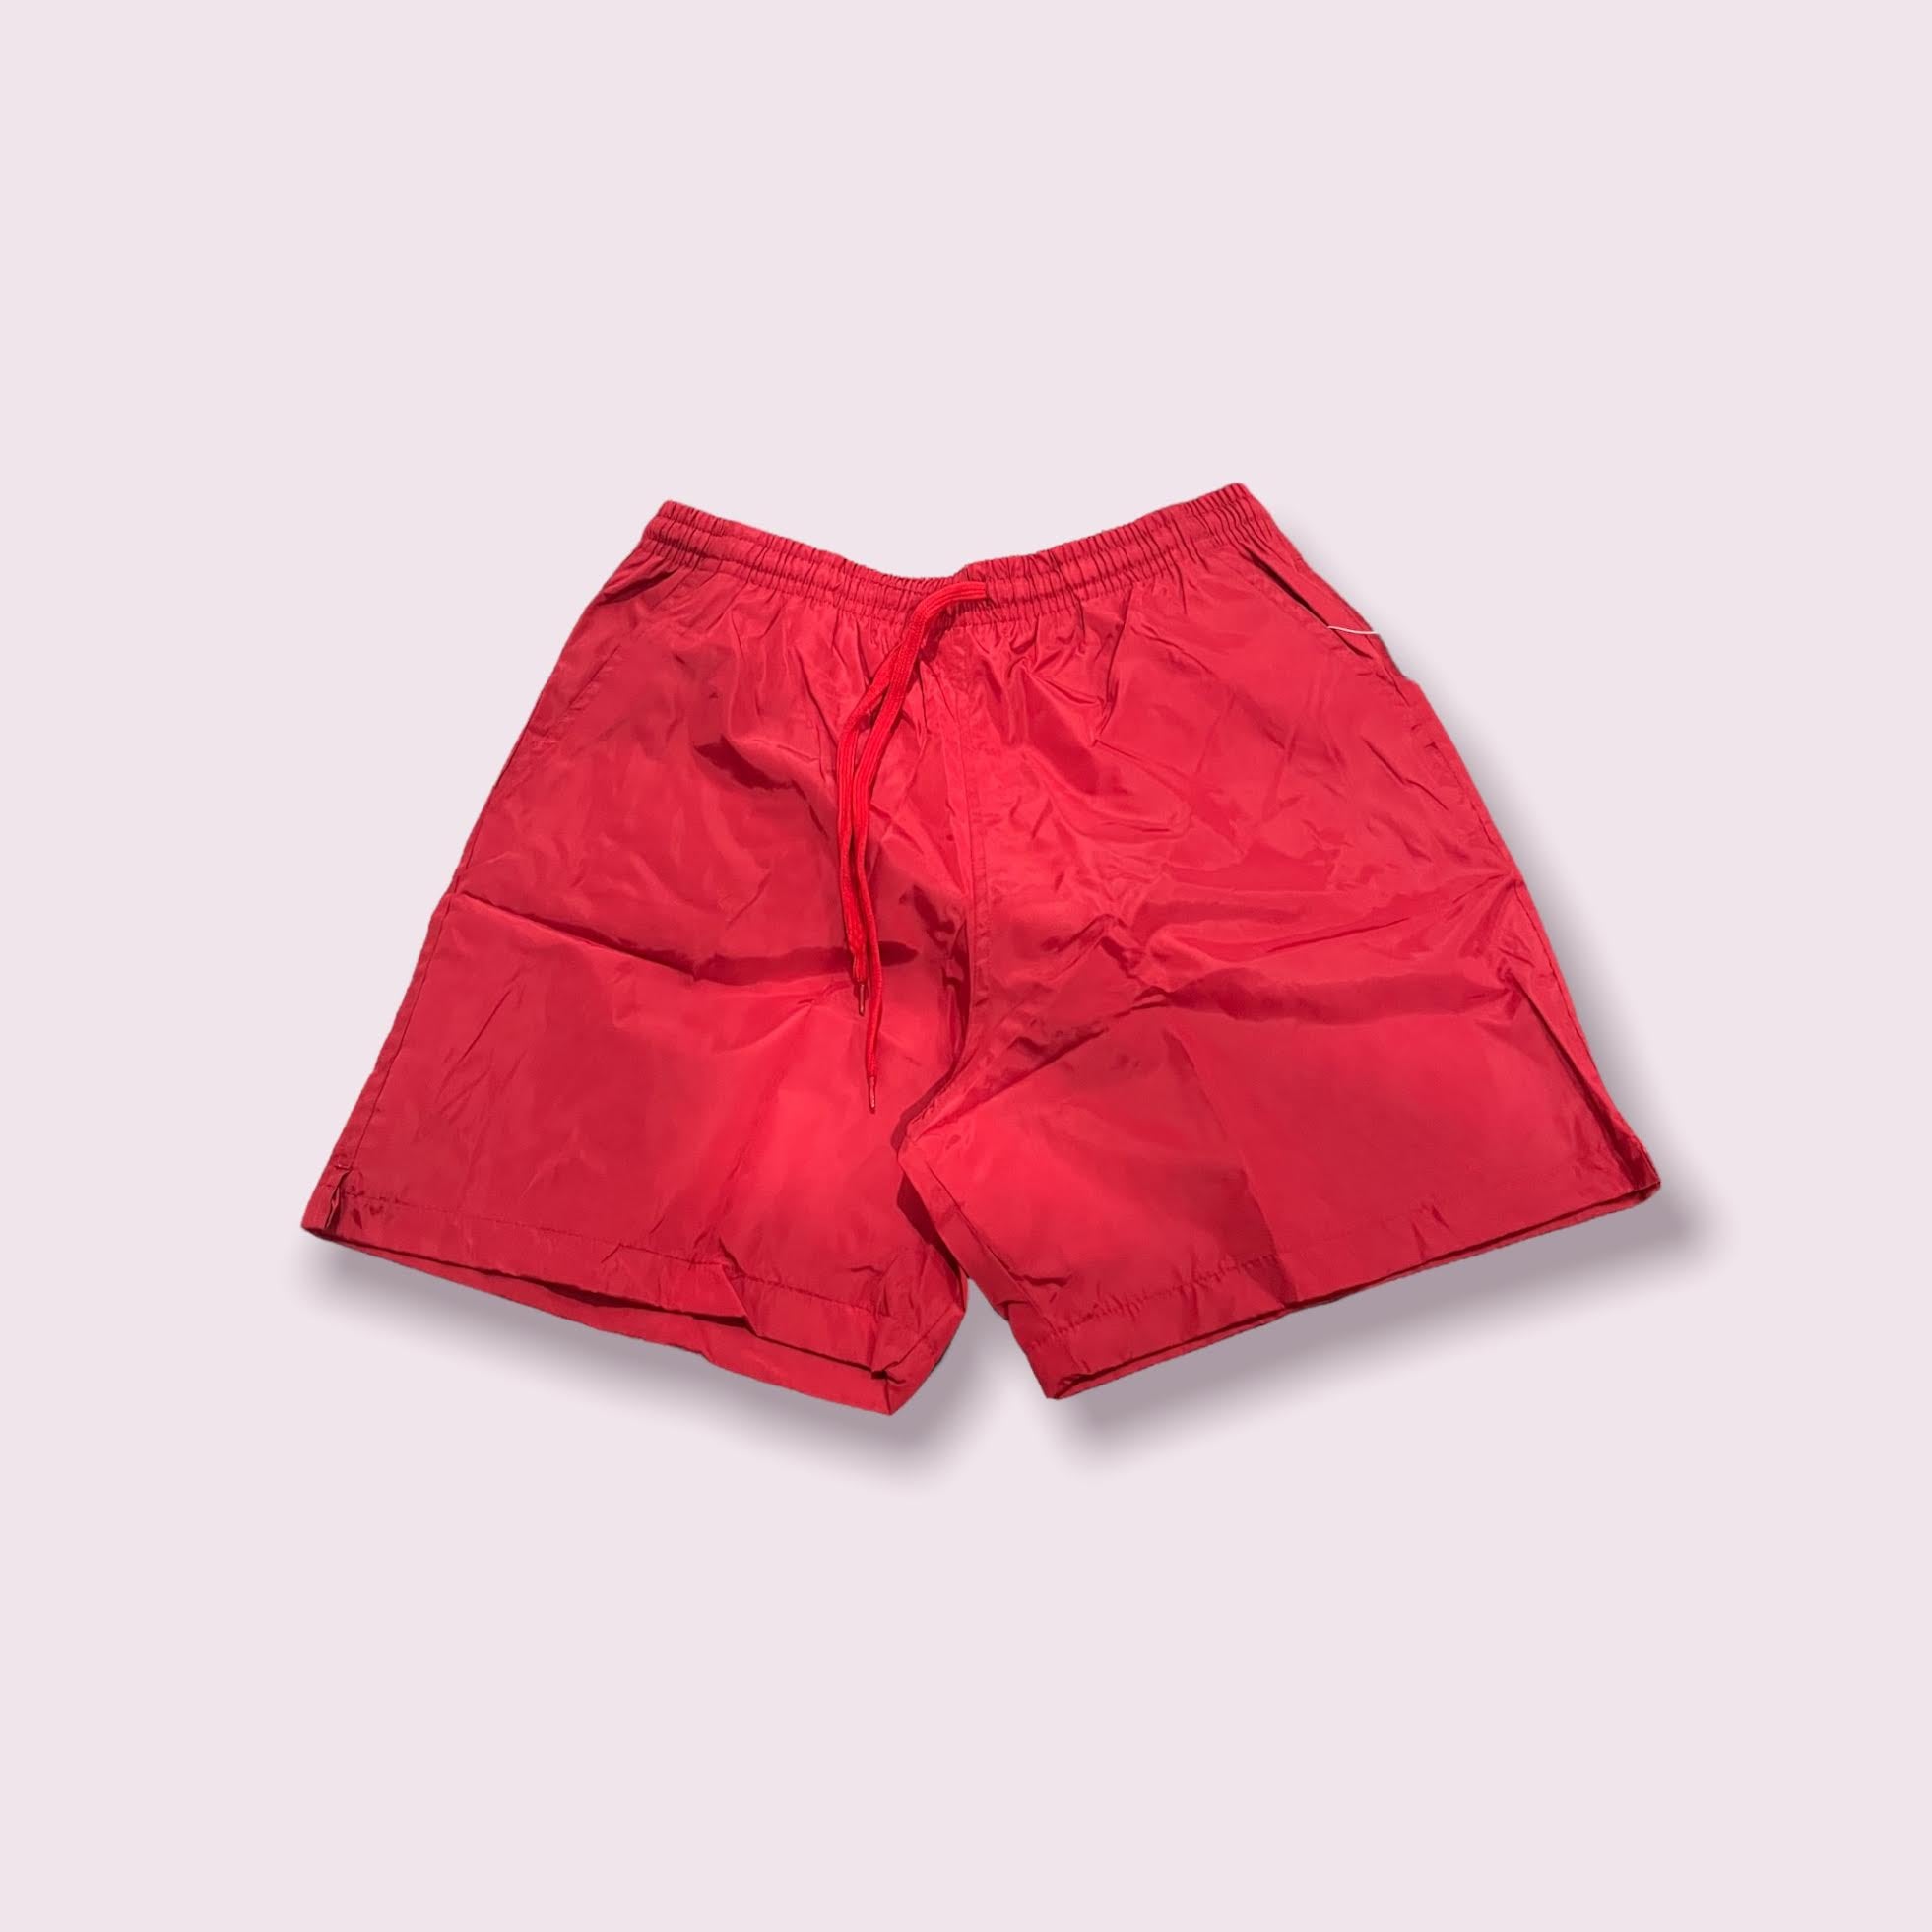 Dark red windbreaker shorts